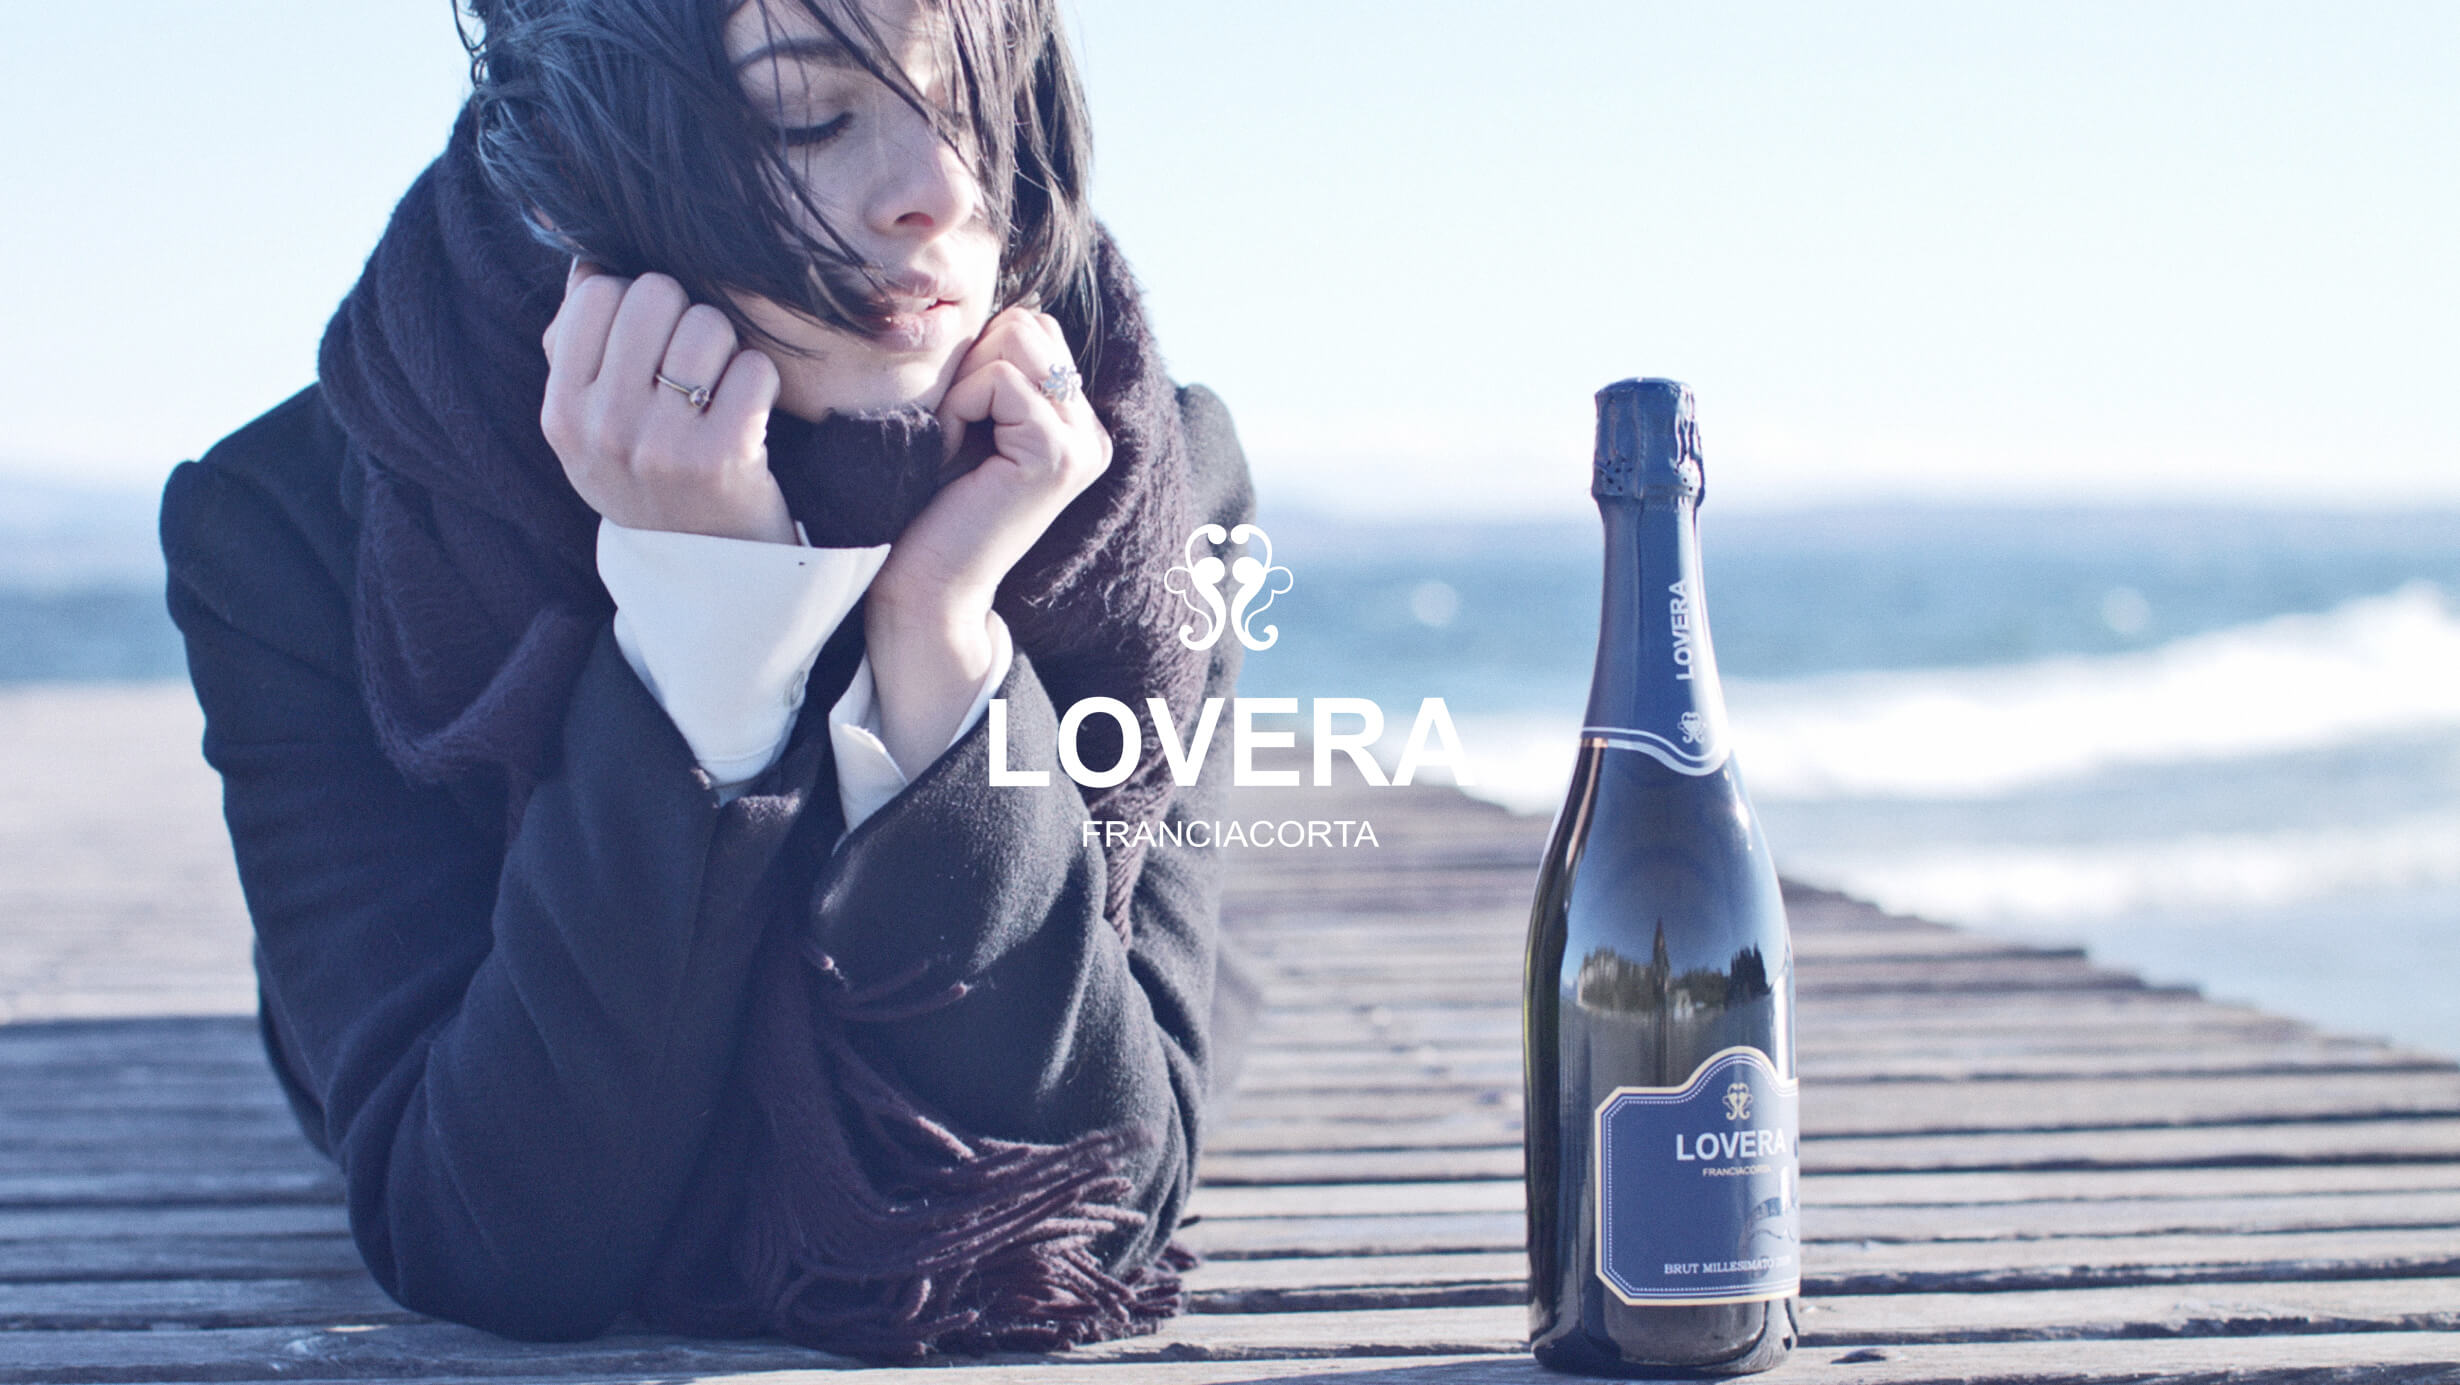 lovera-franciacorta-homepage-img.jpg